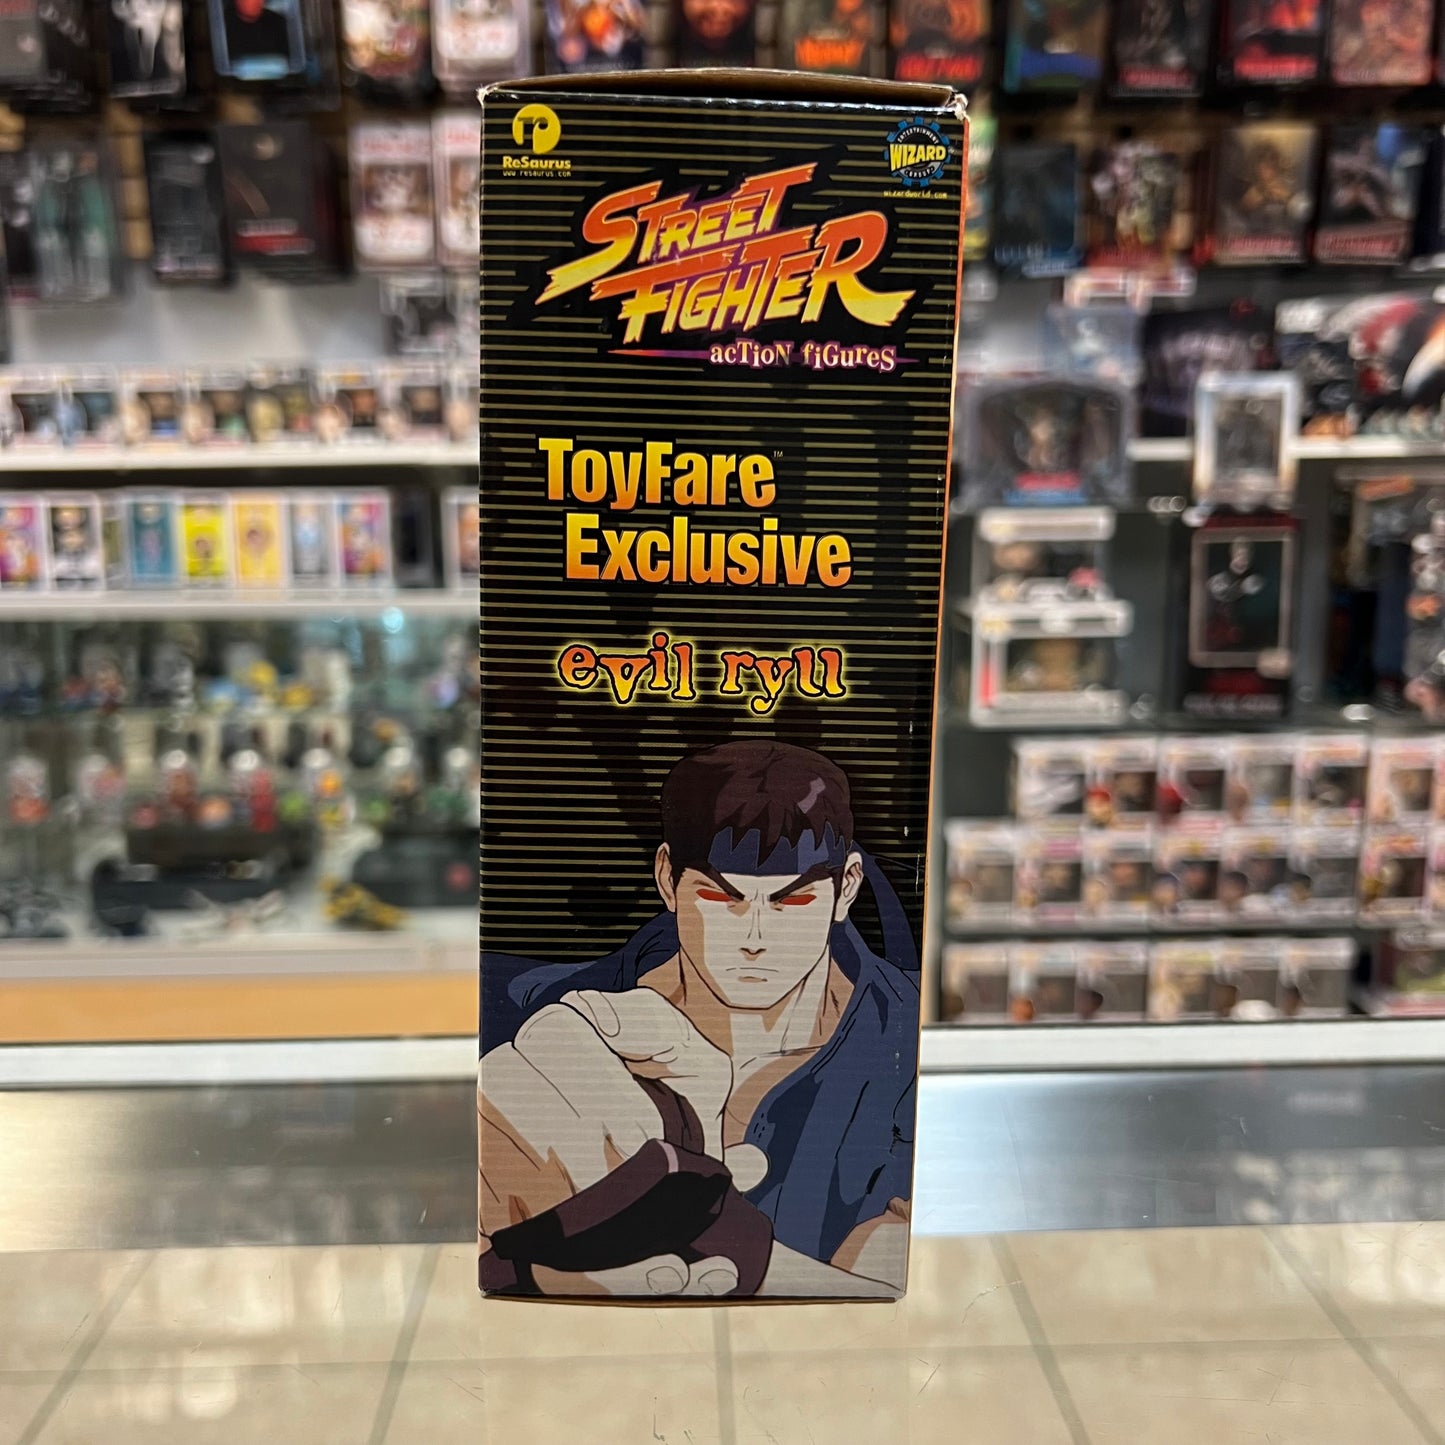 Street Fighter Toyfare Exclusive - Evil Ryu - Action Figure - Resaurus (Wizard World) - 1999